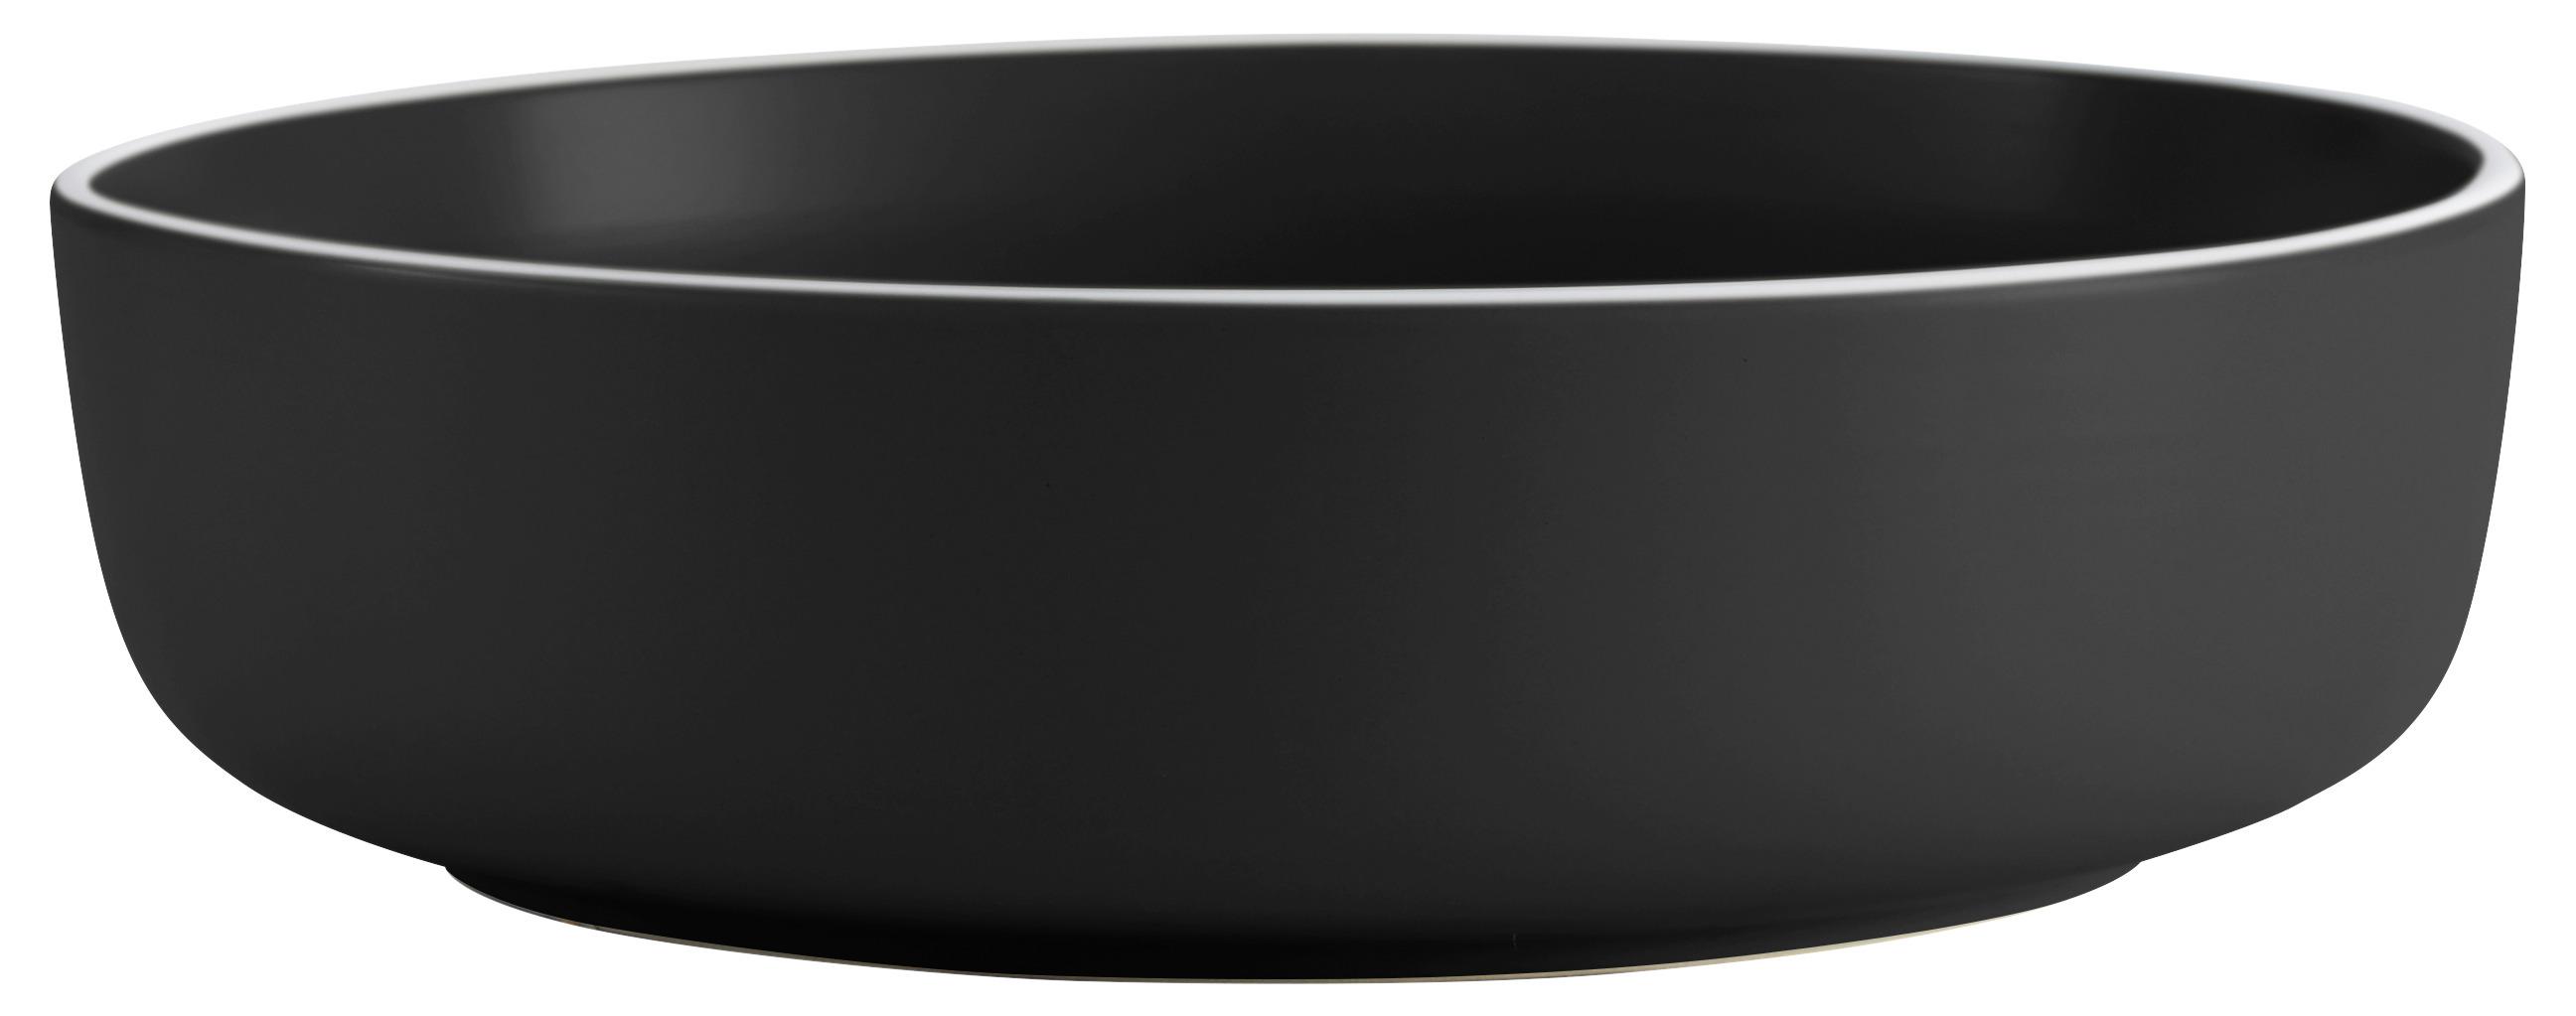 Misa Na Šalát Ragnar, Ø: 26cm - čierna, Moderný, keramika (26cm) - Modern Living